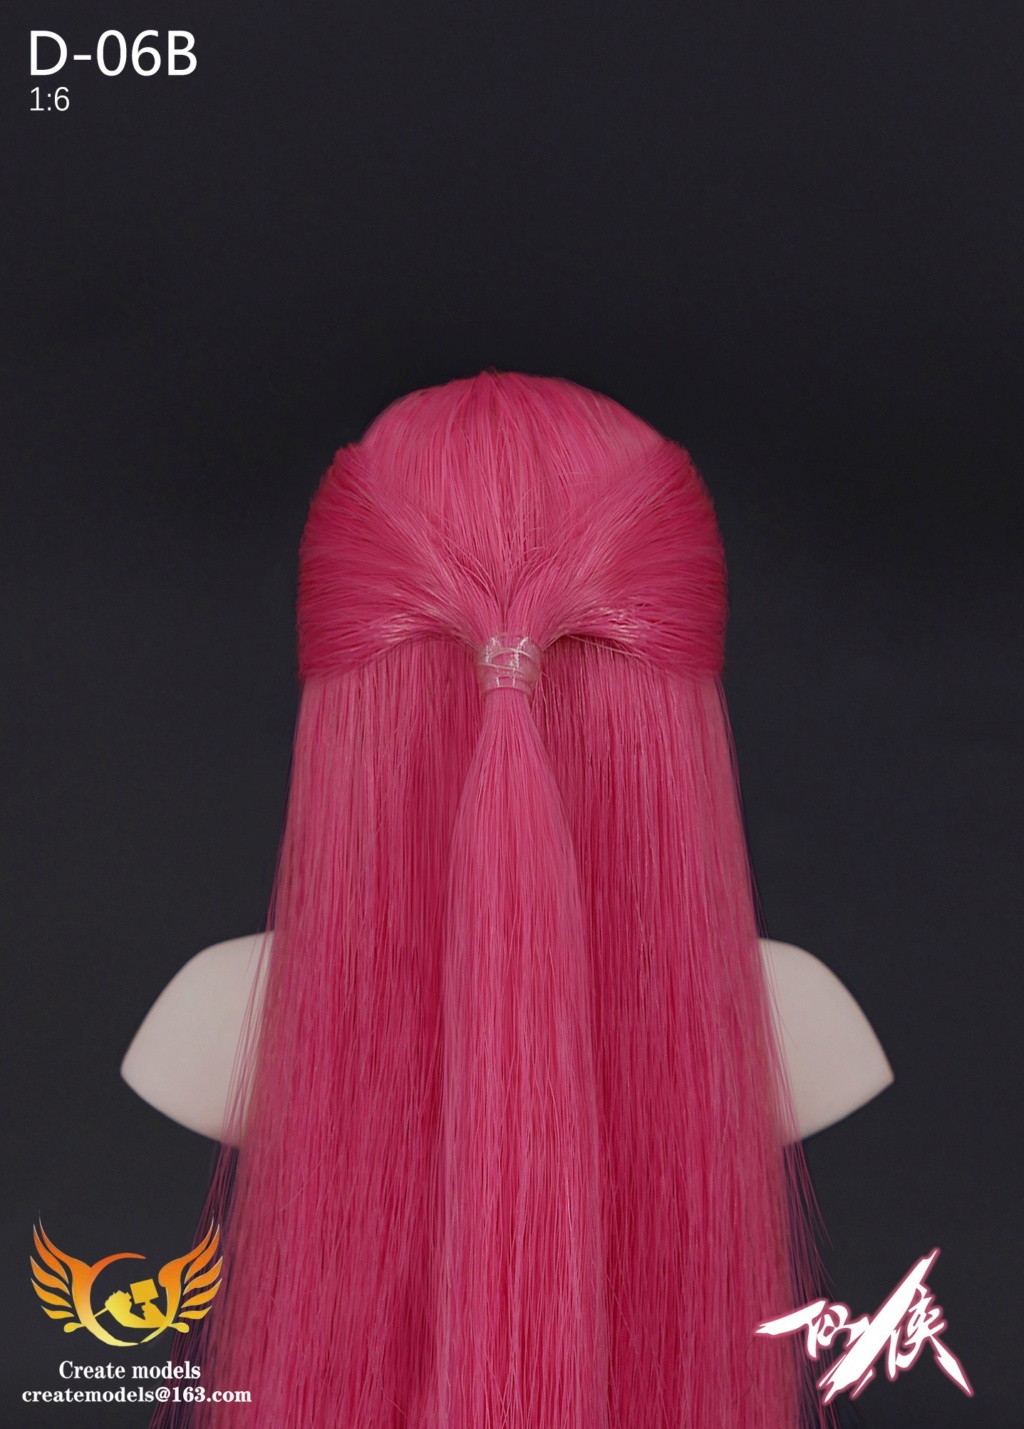 Xianxia - NEW PRODUCT: Createmodels: 1/6 Xianxia series female head - AB two hair colors (D-06) 15341210